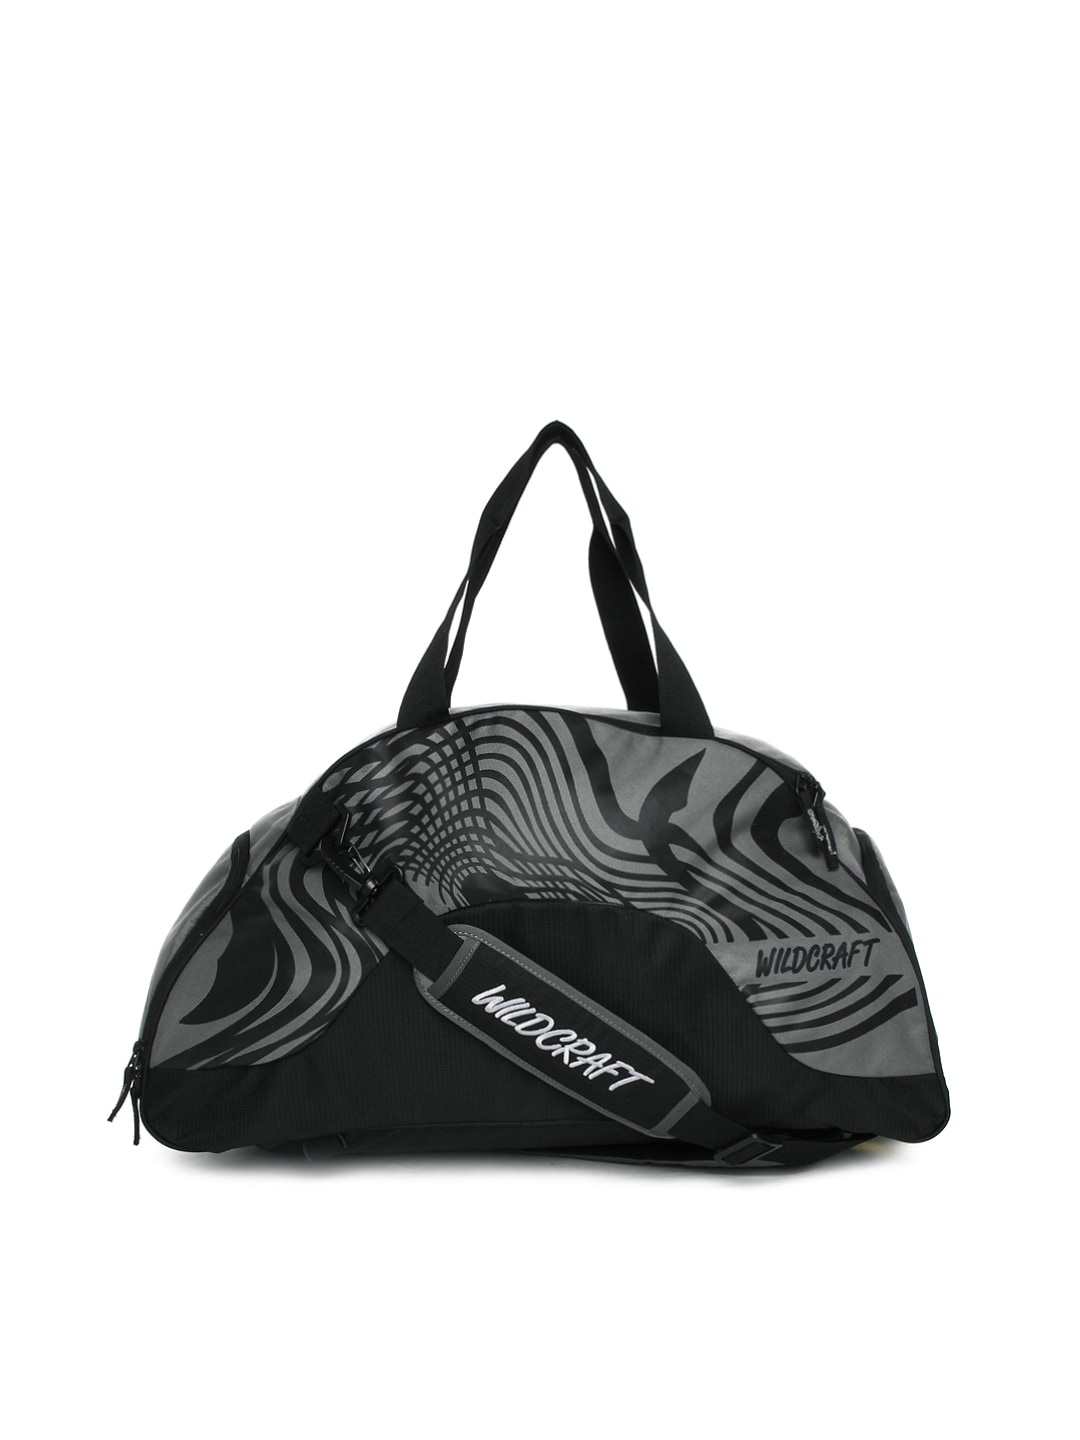 Wildcraft Unisex Black & Grey Duffel Bag